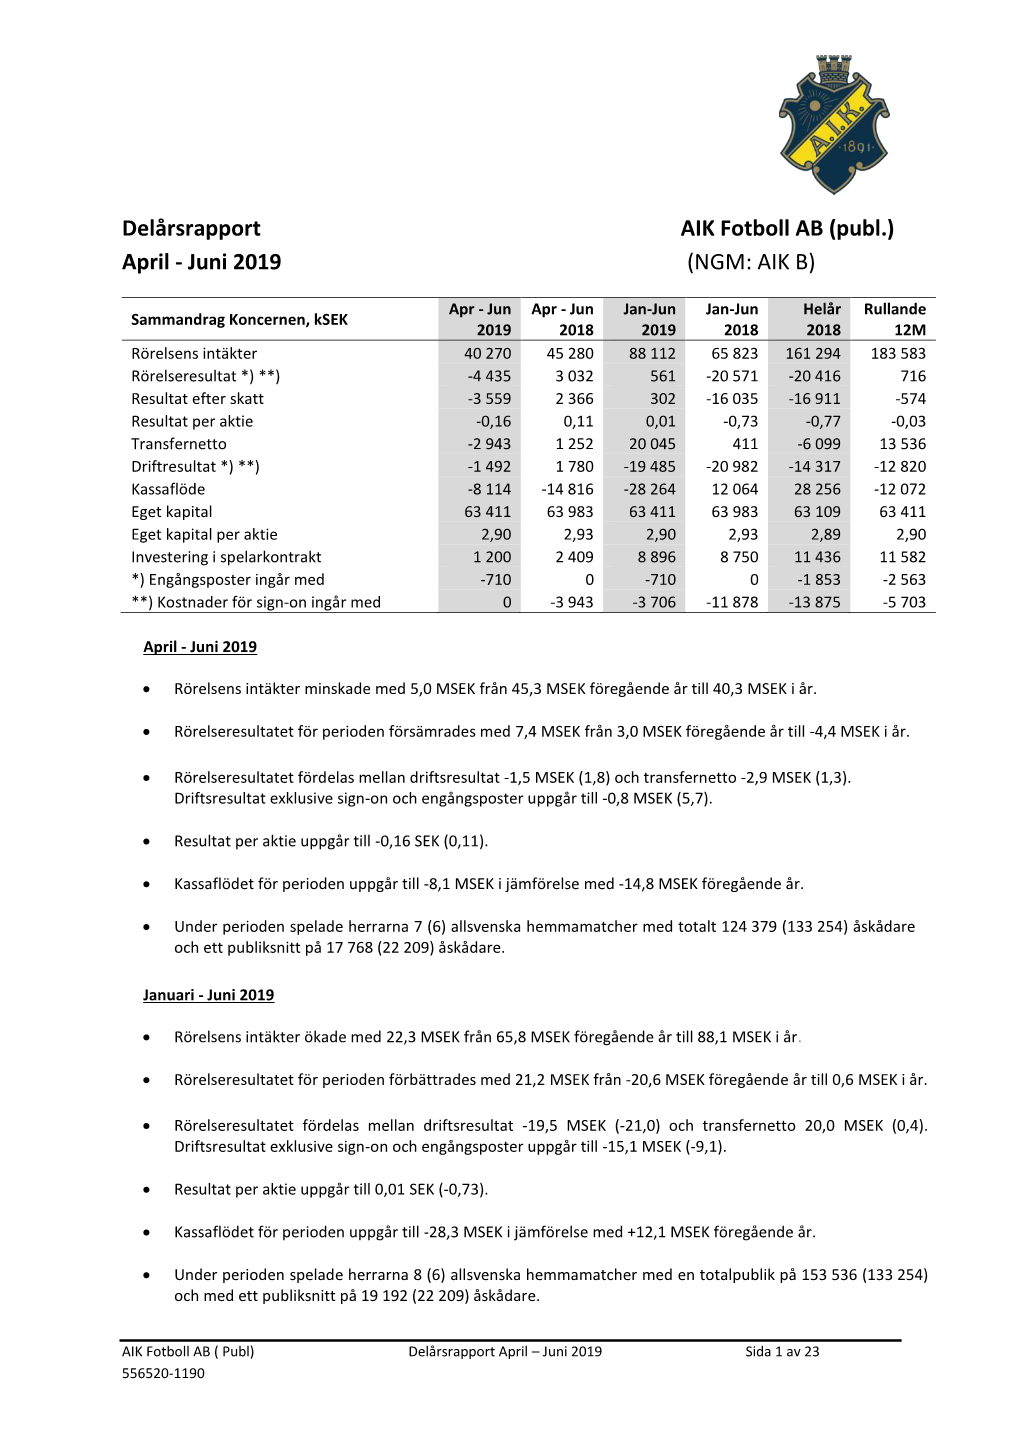 Delårsrapport AIK Fotboll AB (Publ.) April - Juni 2019 (NGM: AIK B)